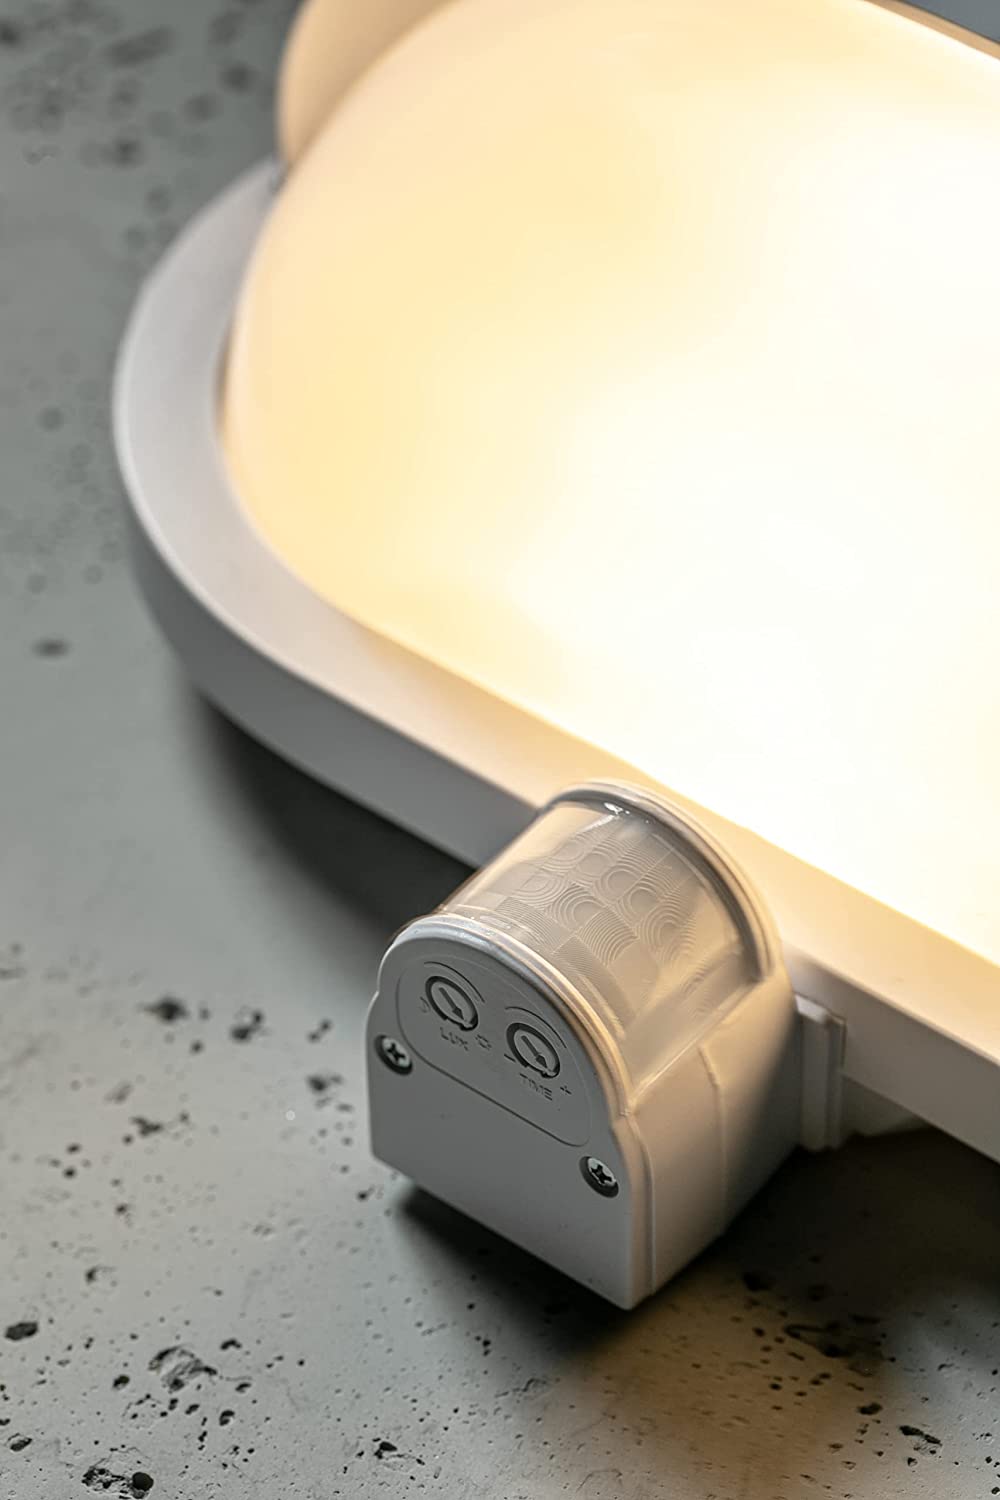 CGC VESPA White Oval Eyelid Bulkhead Wall Light With Motion Sensor